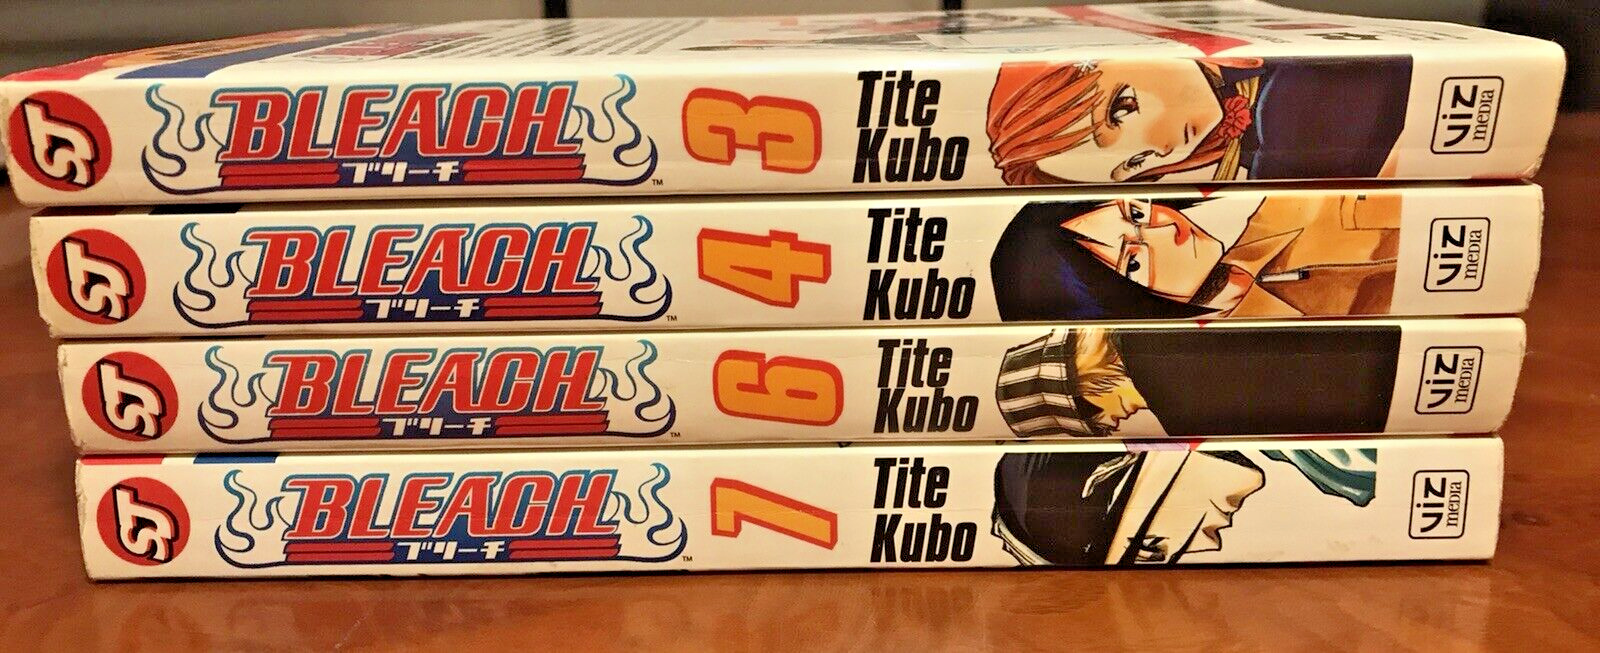 Bleach by Tite Kubo Shonen Jump Viz Media Bleach Vol 3, 4, 6, & 7 English Manga